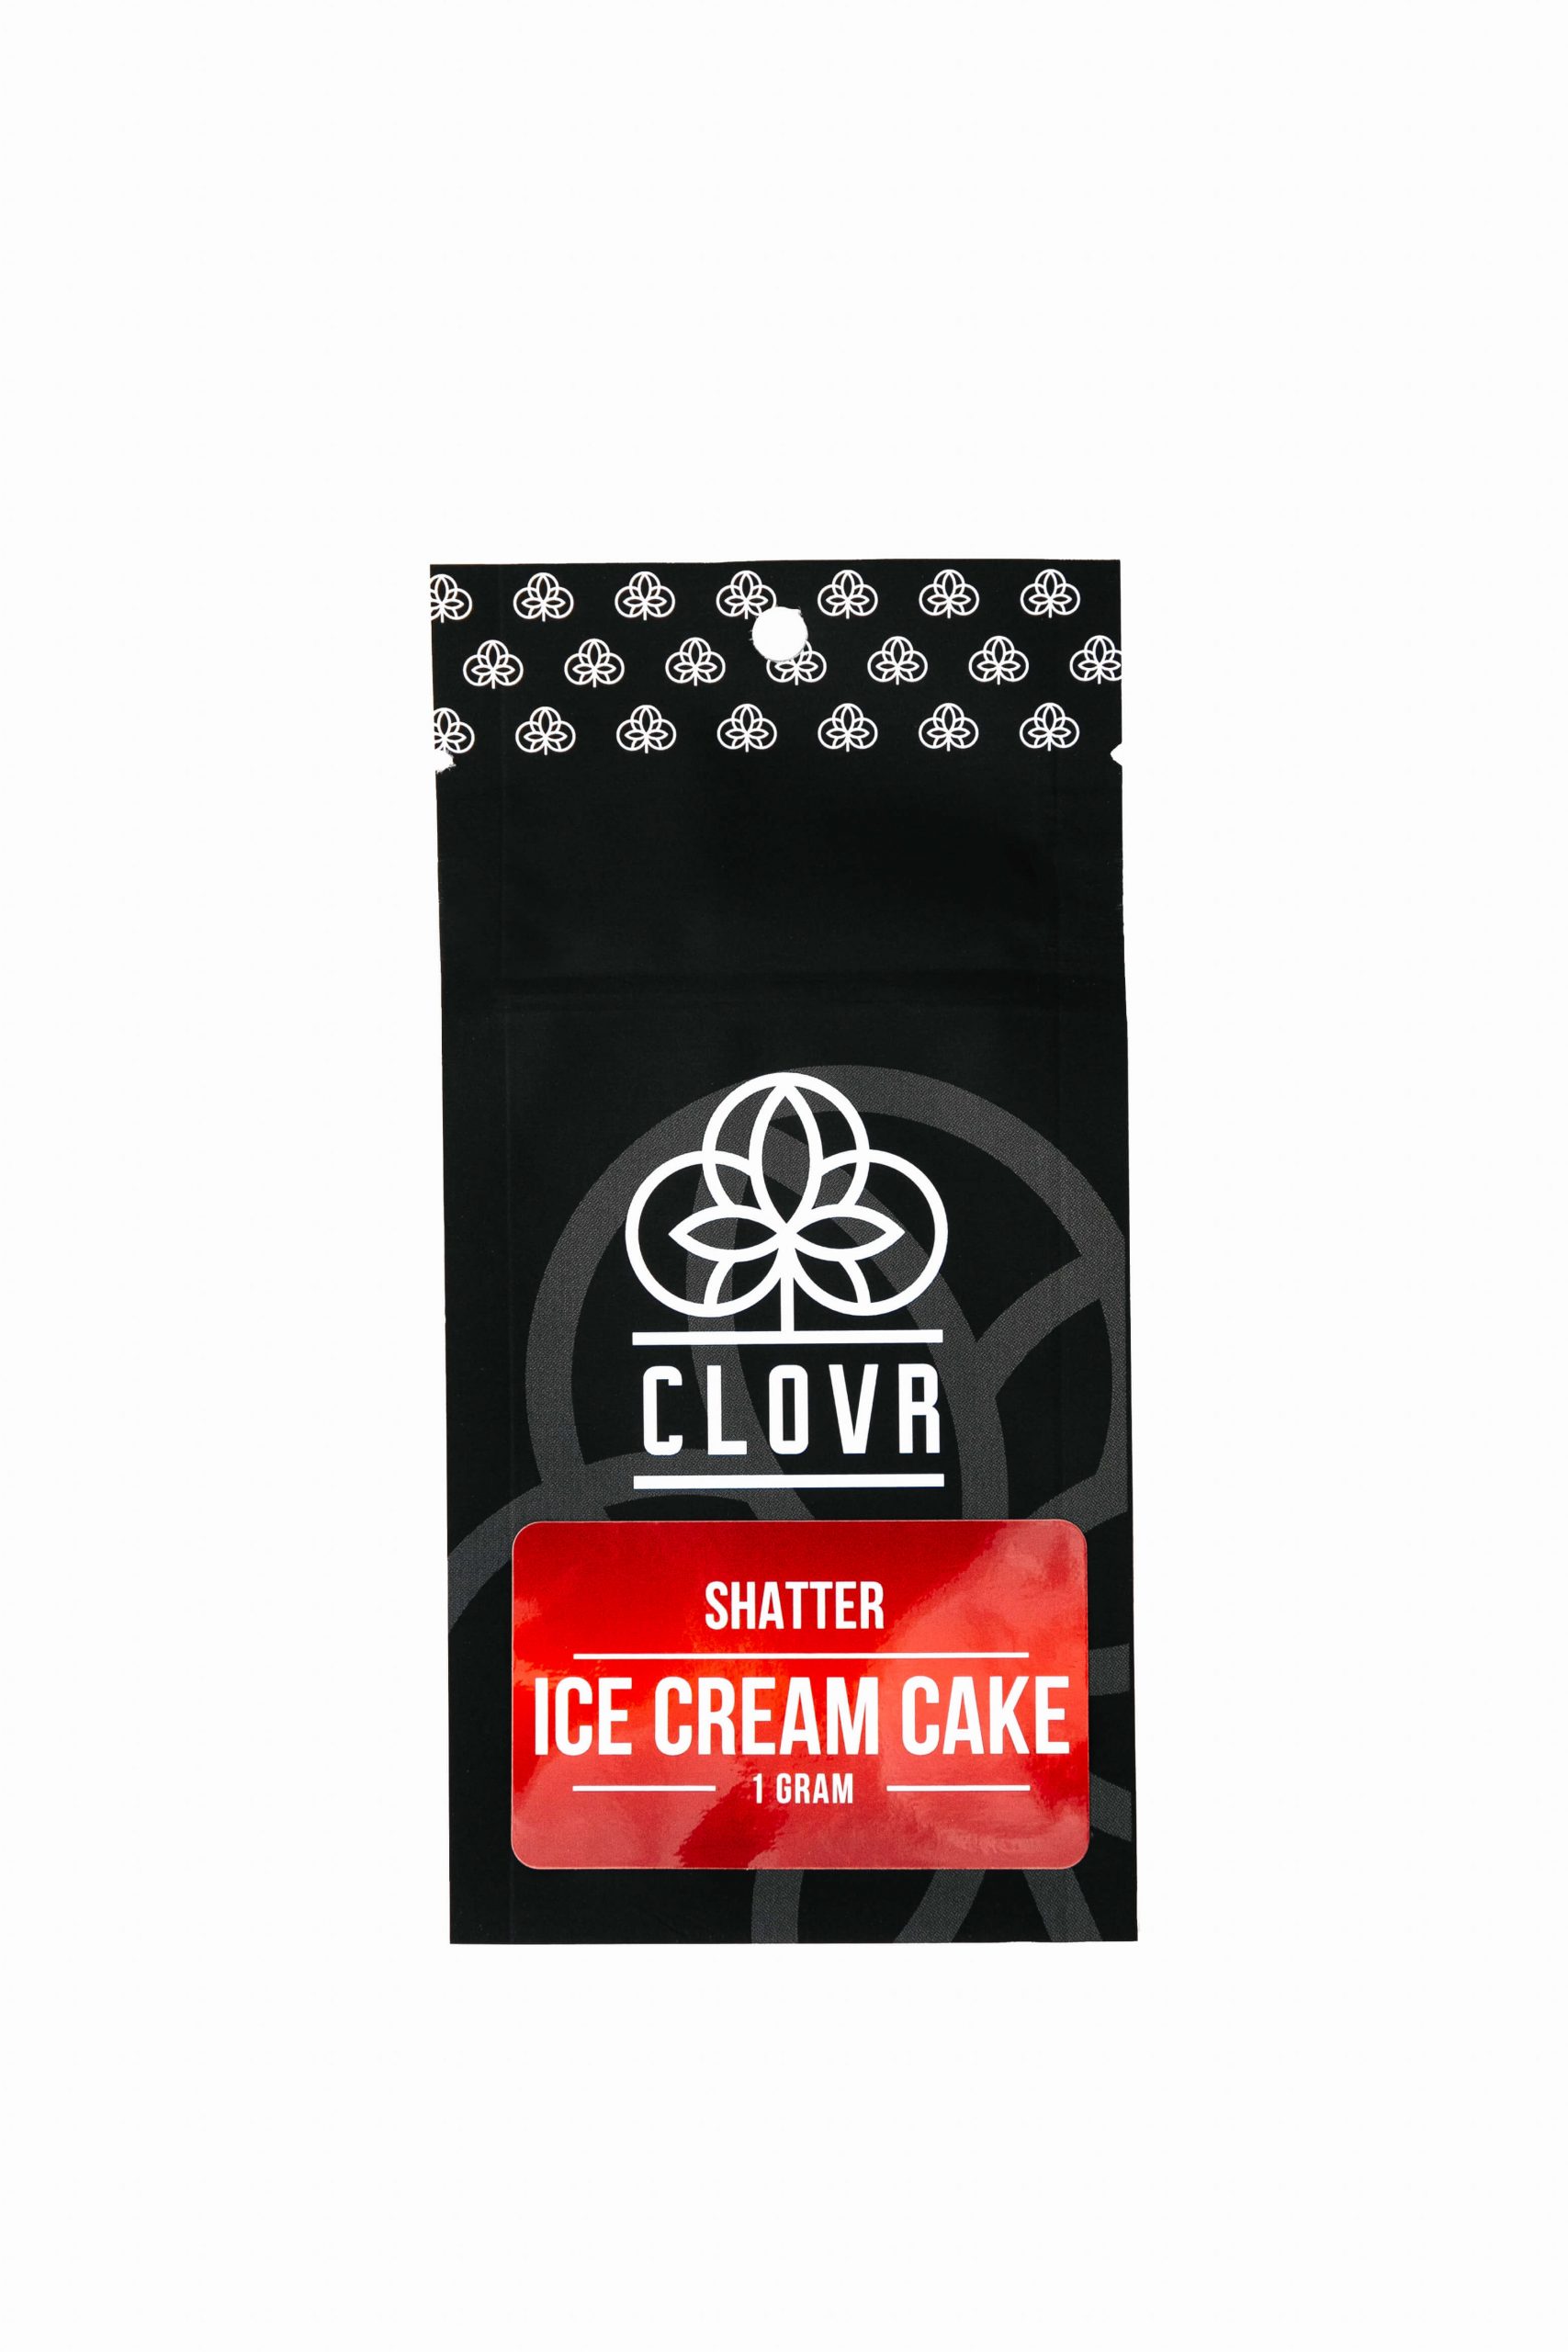 clovr marijuana shatter concentrate ice cream cake packaging